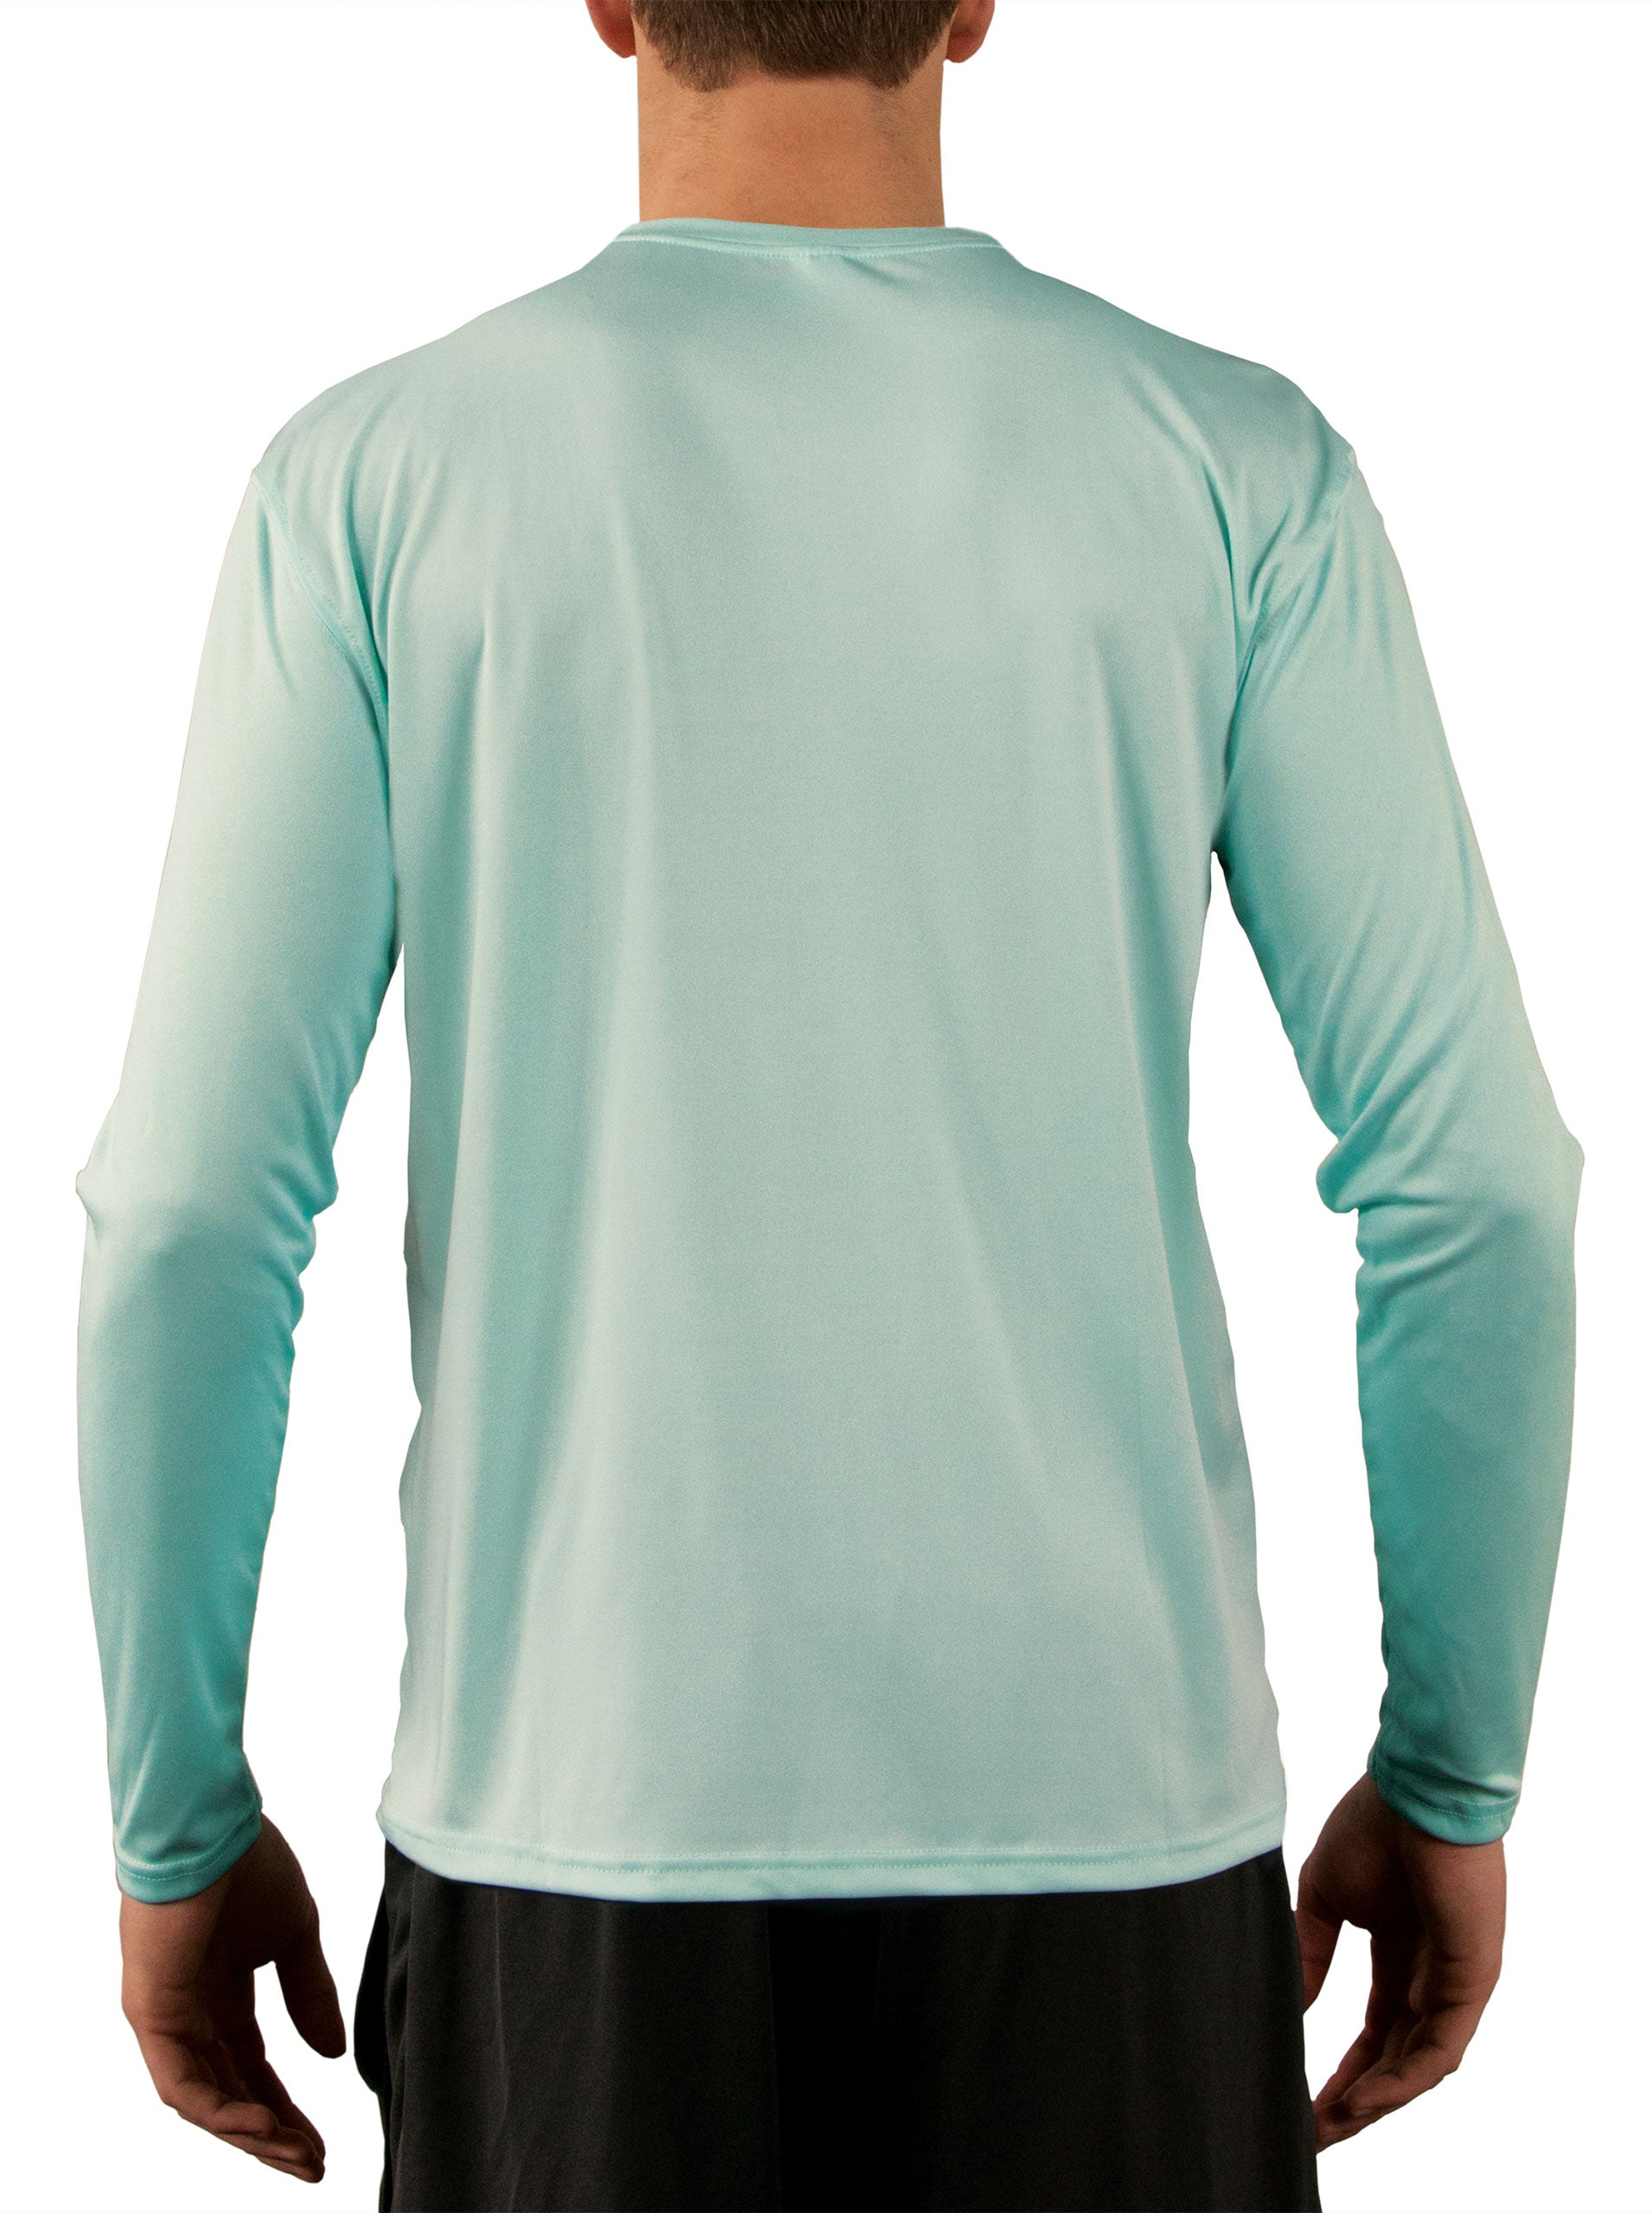 Fishing Shirts Men's Quick Dry Lightweight UPF 50+ Long Sleeve Shirts Rash Guard Swim Shirts Hiking Shirts Moisture Wicking 4XL / White